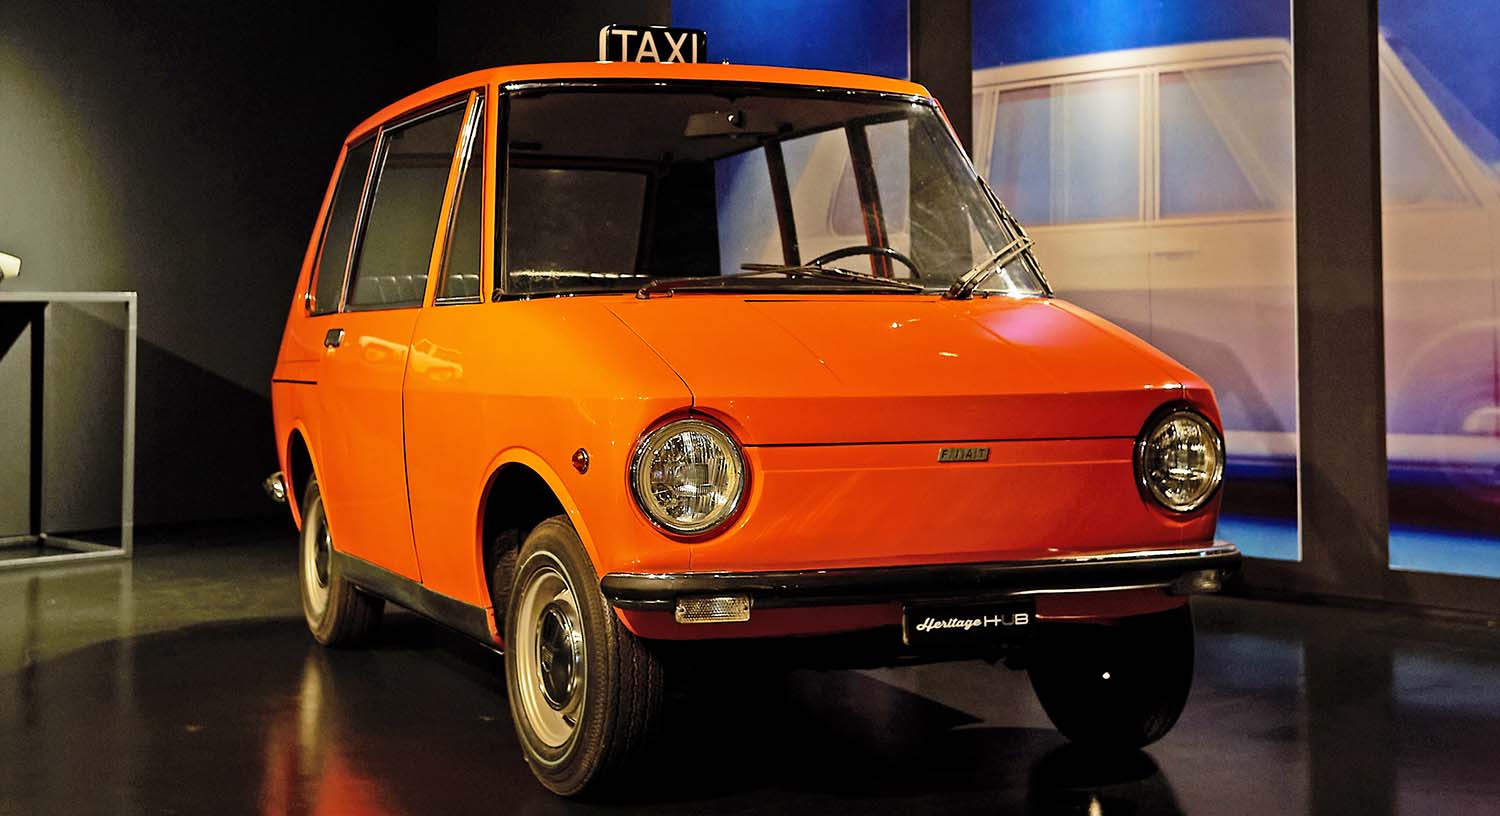 Mauto Celebrates The 50th Anniversary Of The Fiat 127 And Pays Tribute To Its Designer, Pio Manzù.